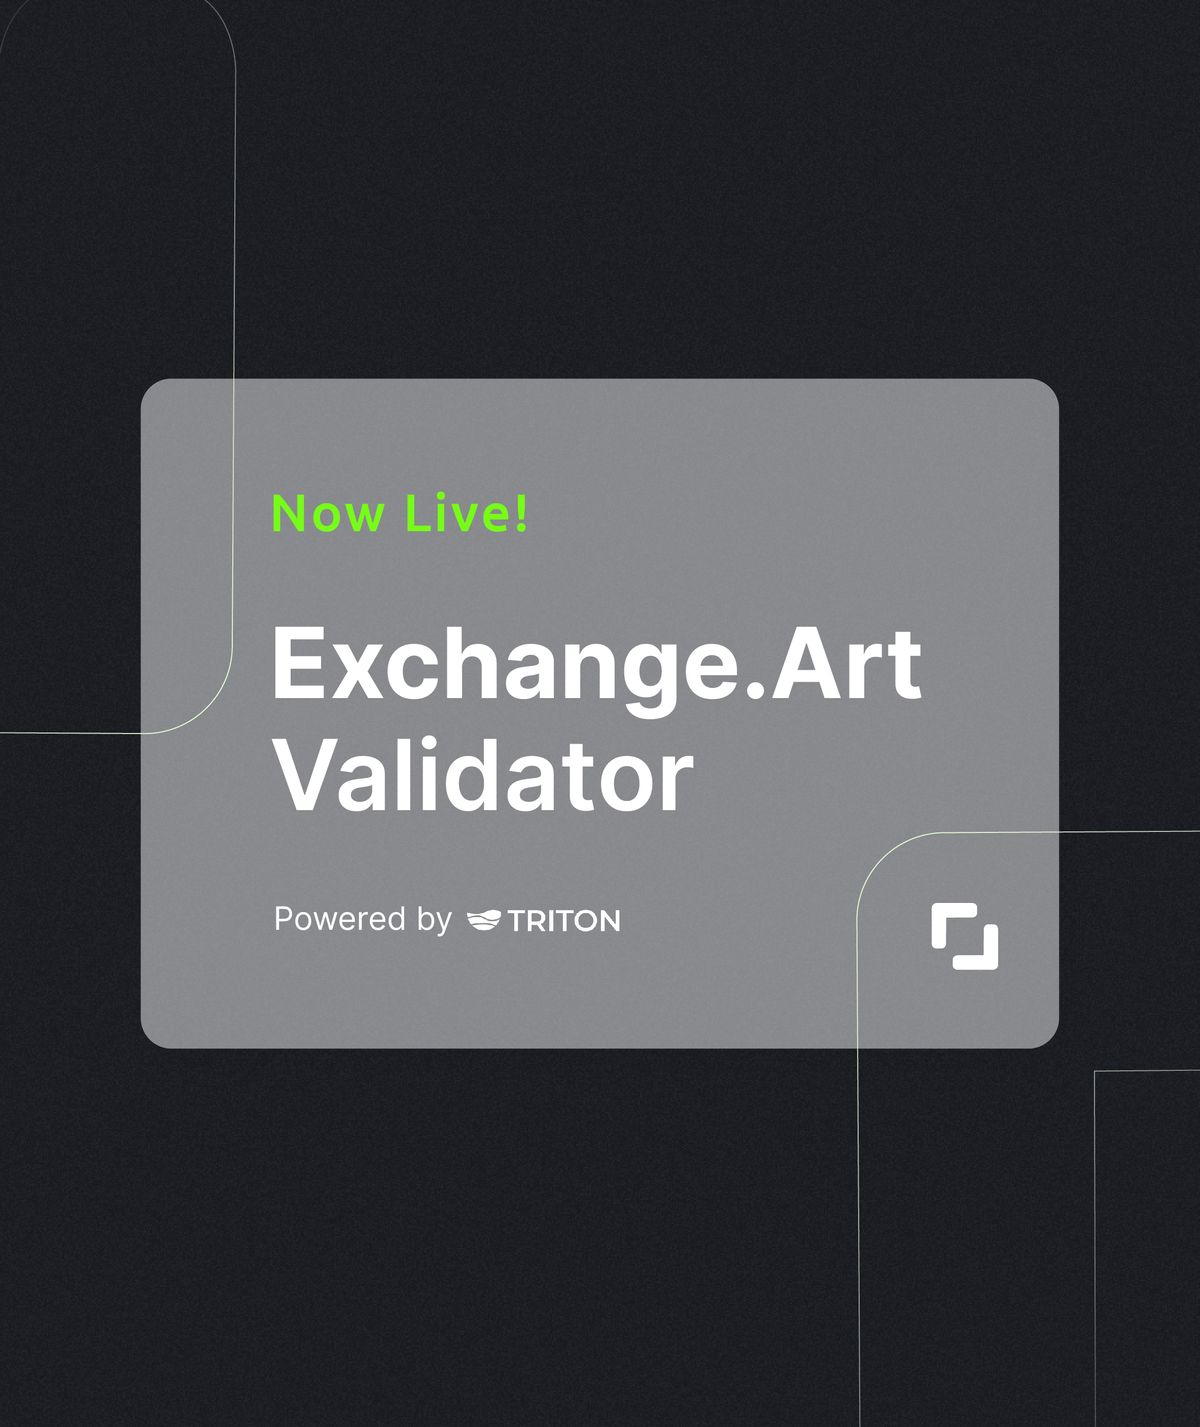 Introducing the Exchange.Art Validator